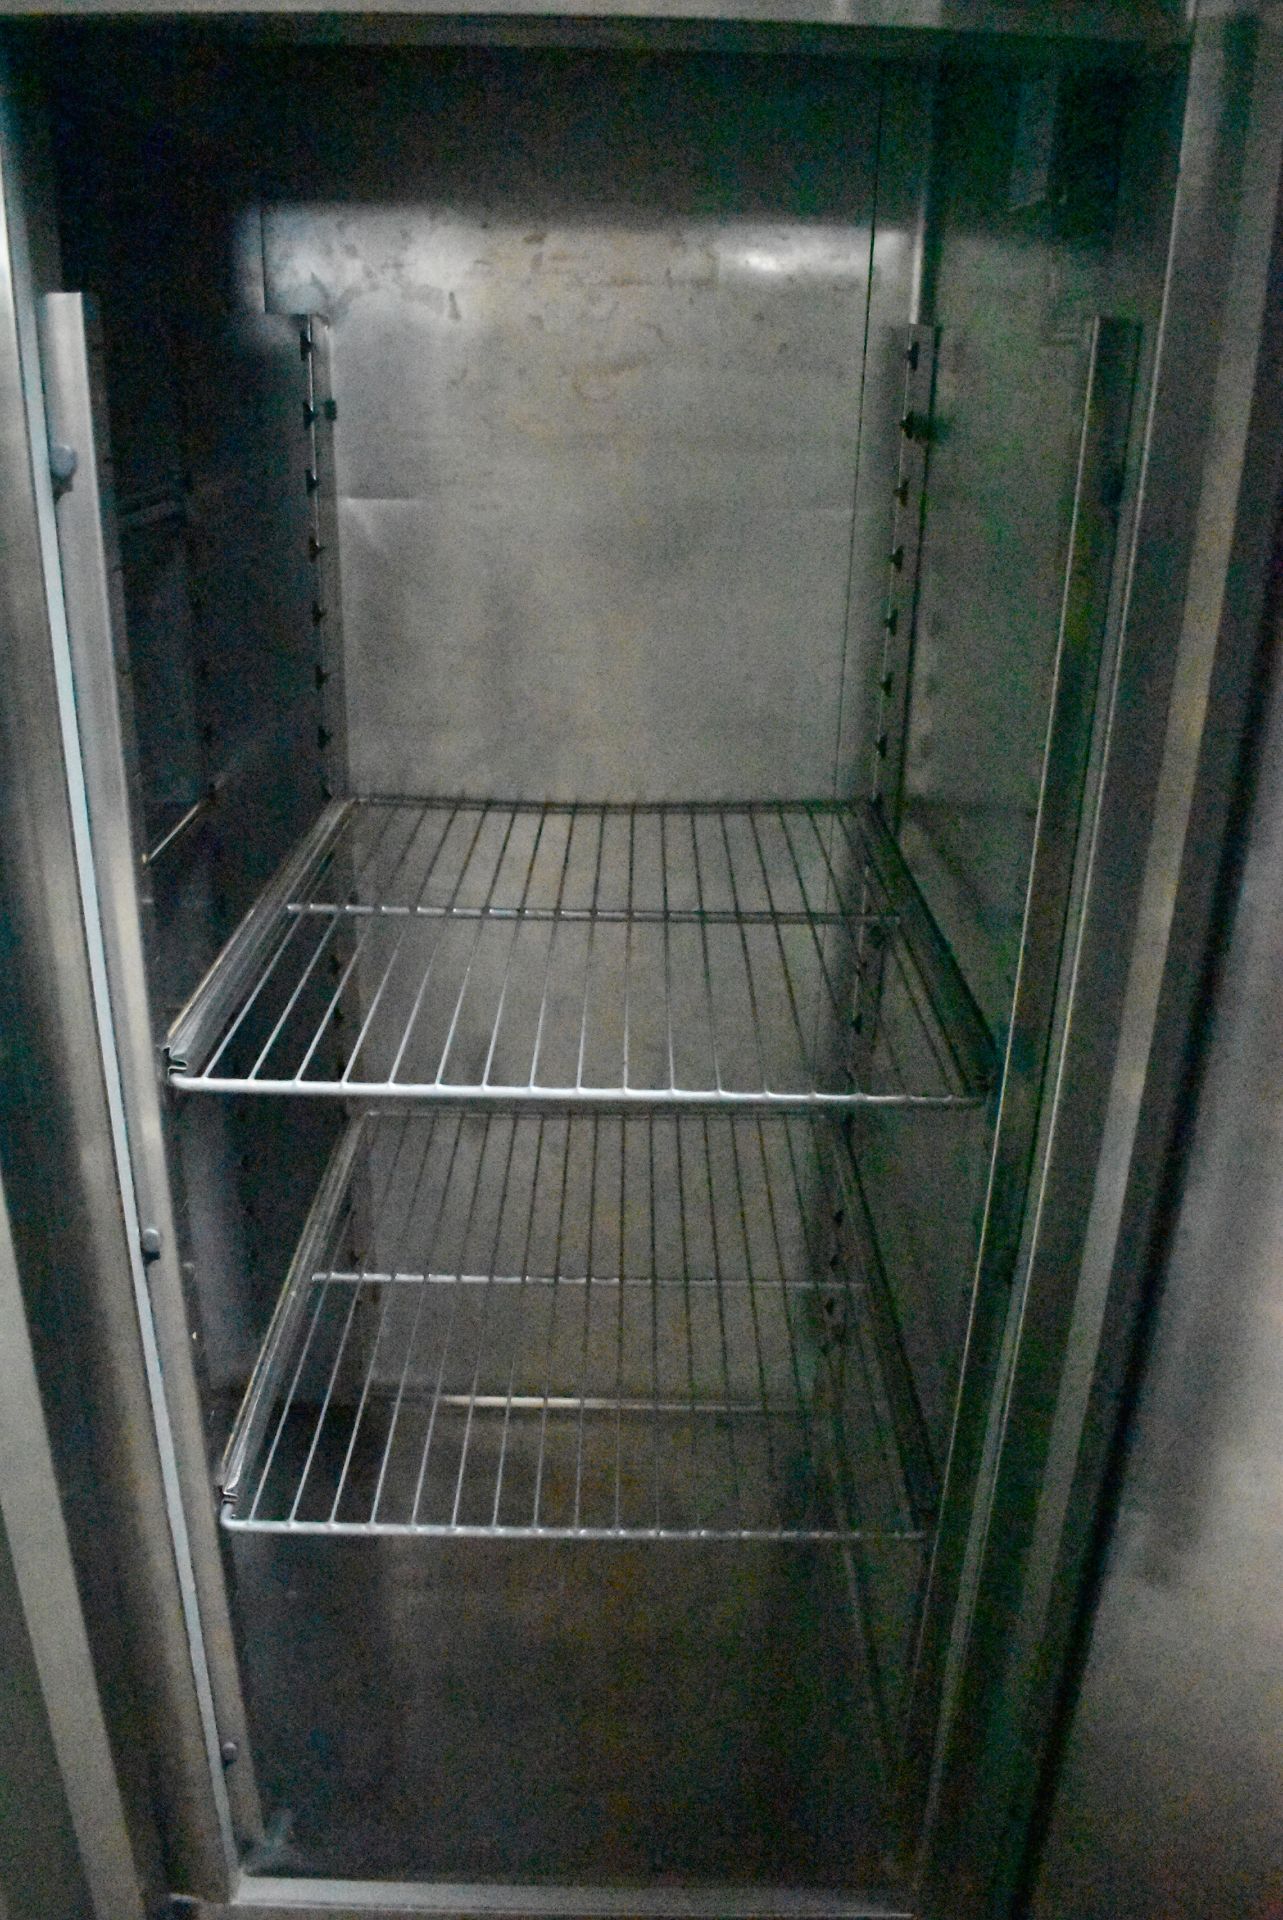 1 x Williams Jade Double Door Upright Refrigerator - 1295Ltr Capacity - Model MJ2-SA - Image 8 of 14